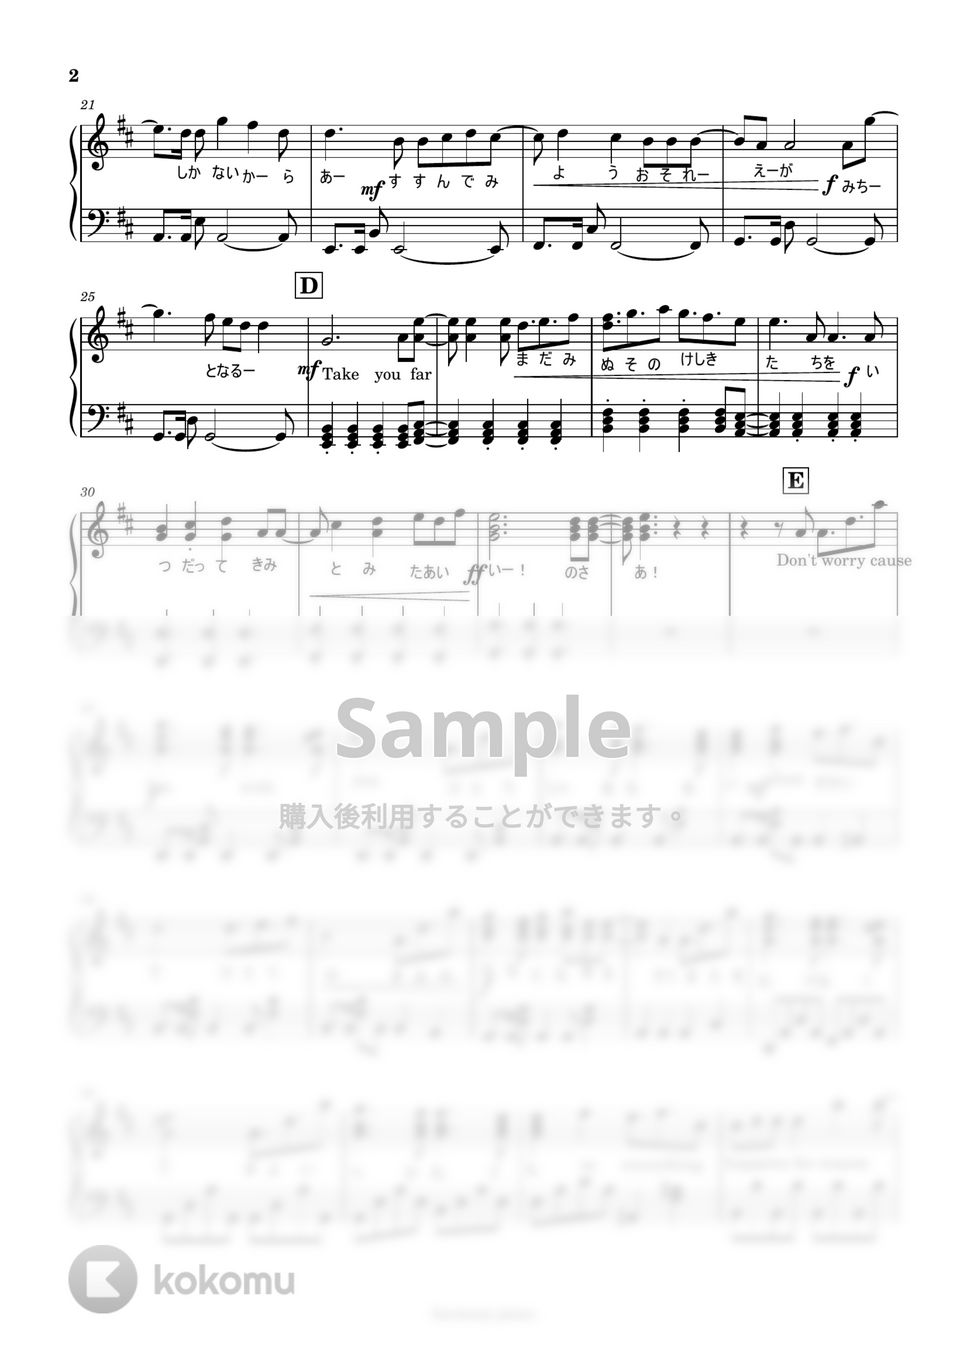 8LOOM - 君の花になる (歌詞付) by harmony piano